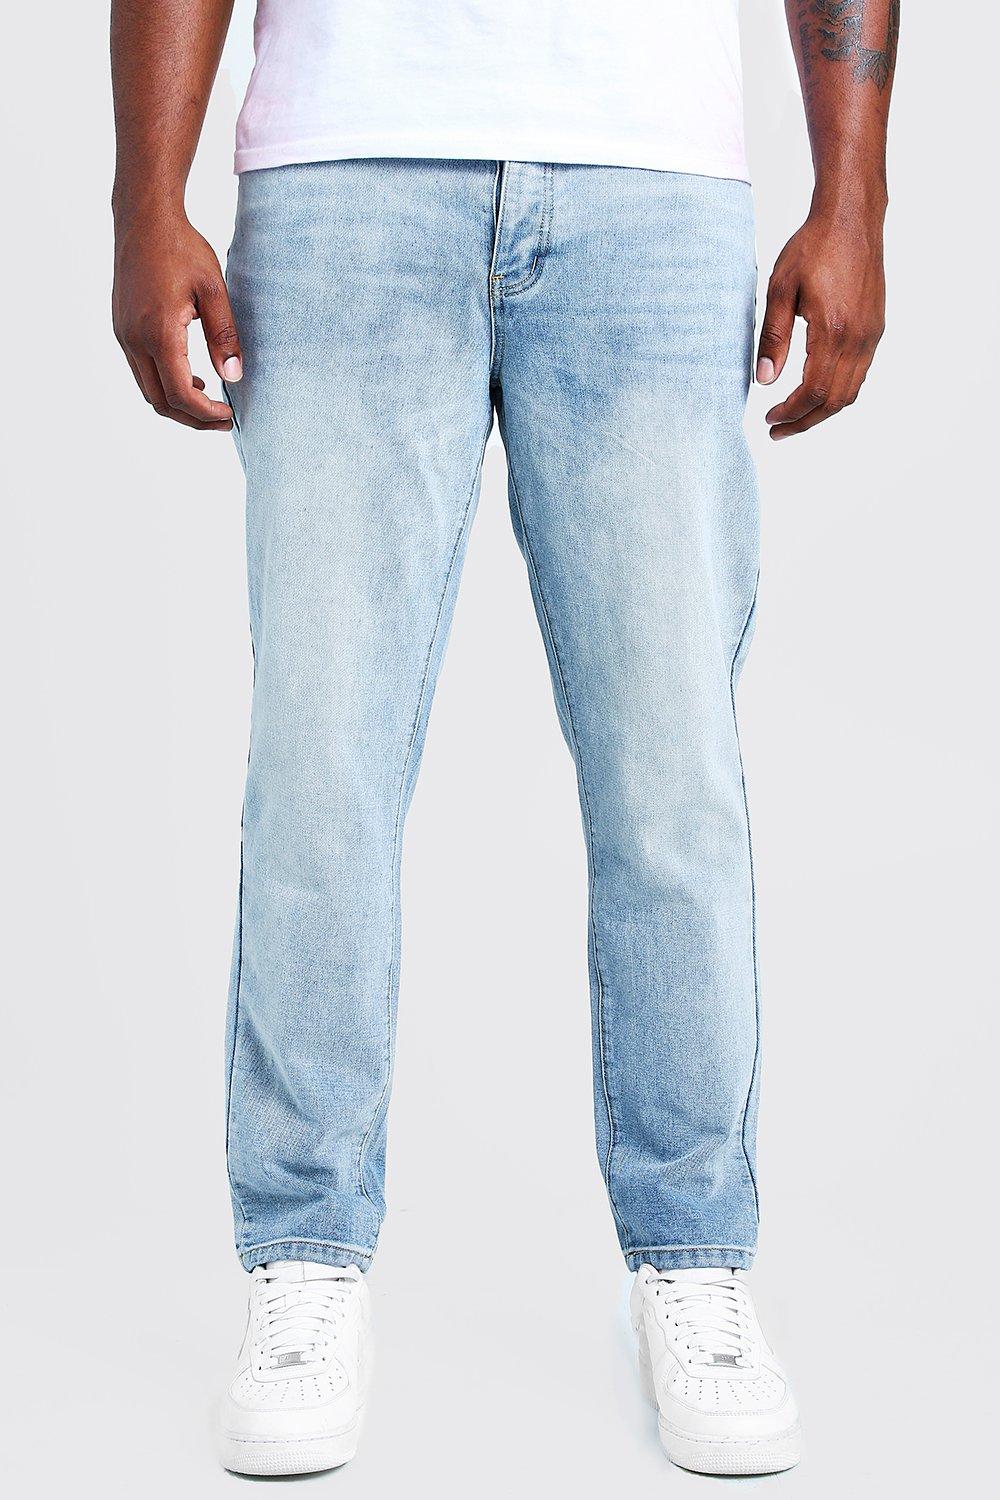 mens loose fit jeans 42x34